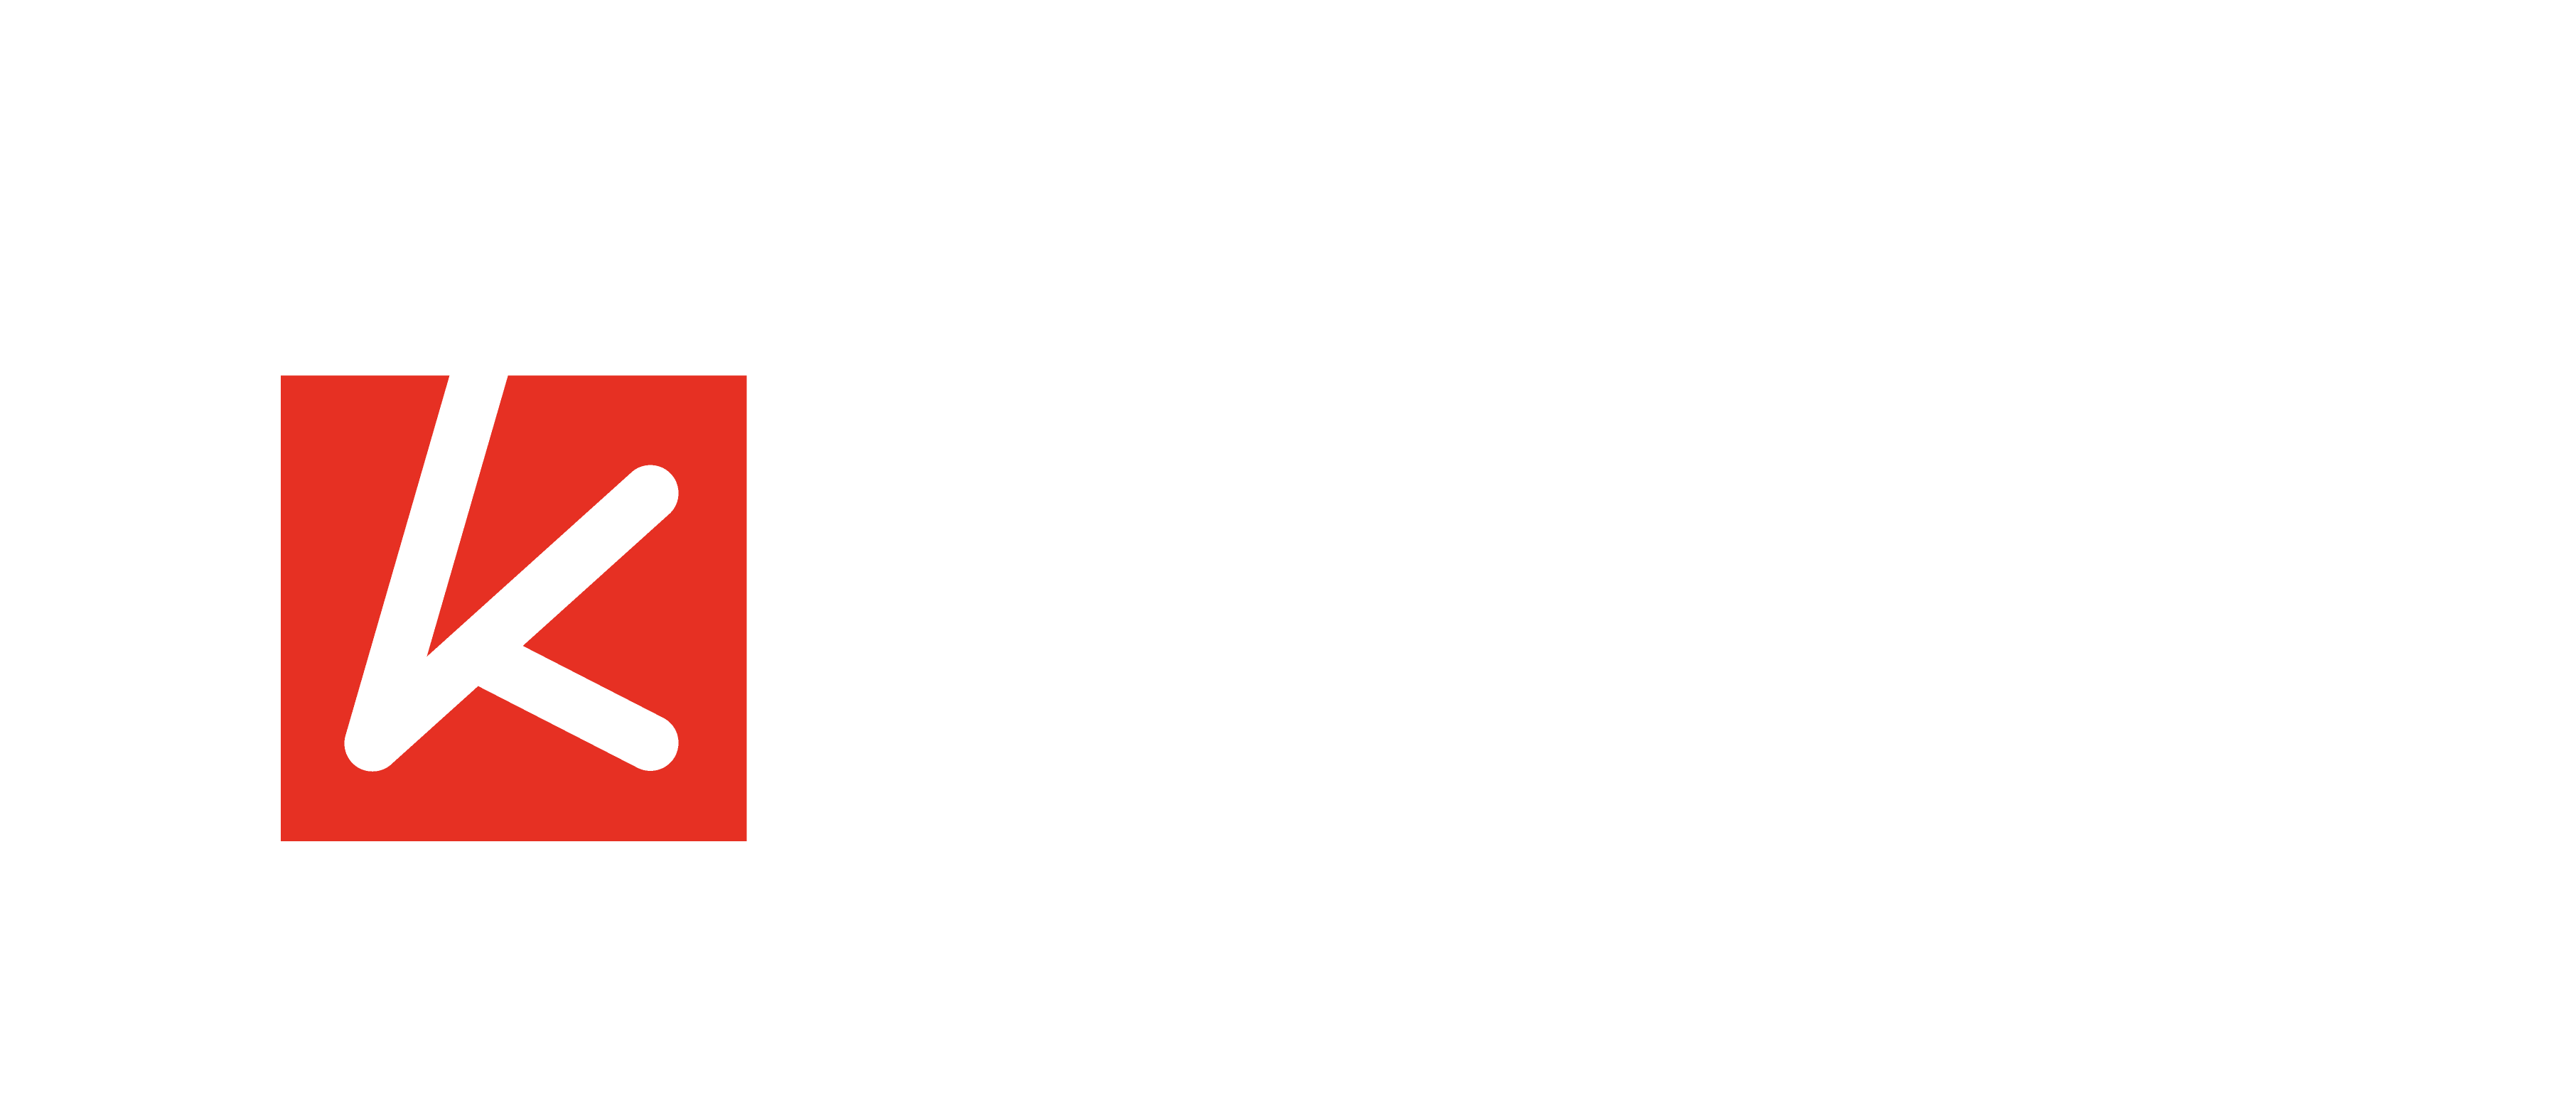 viva-vity-logo-white